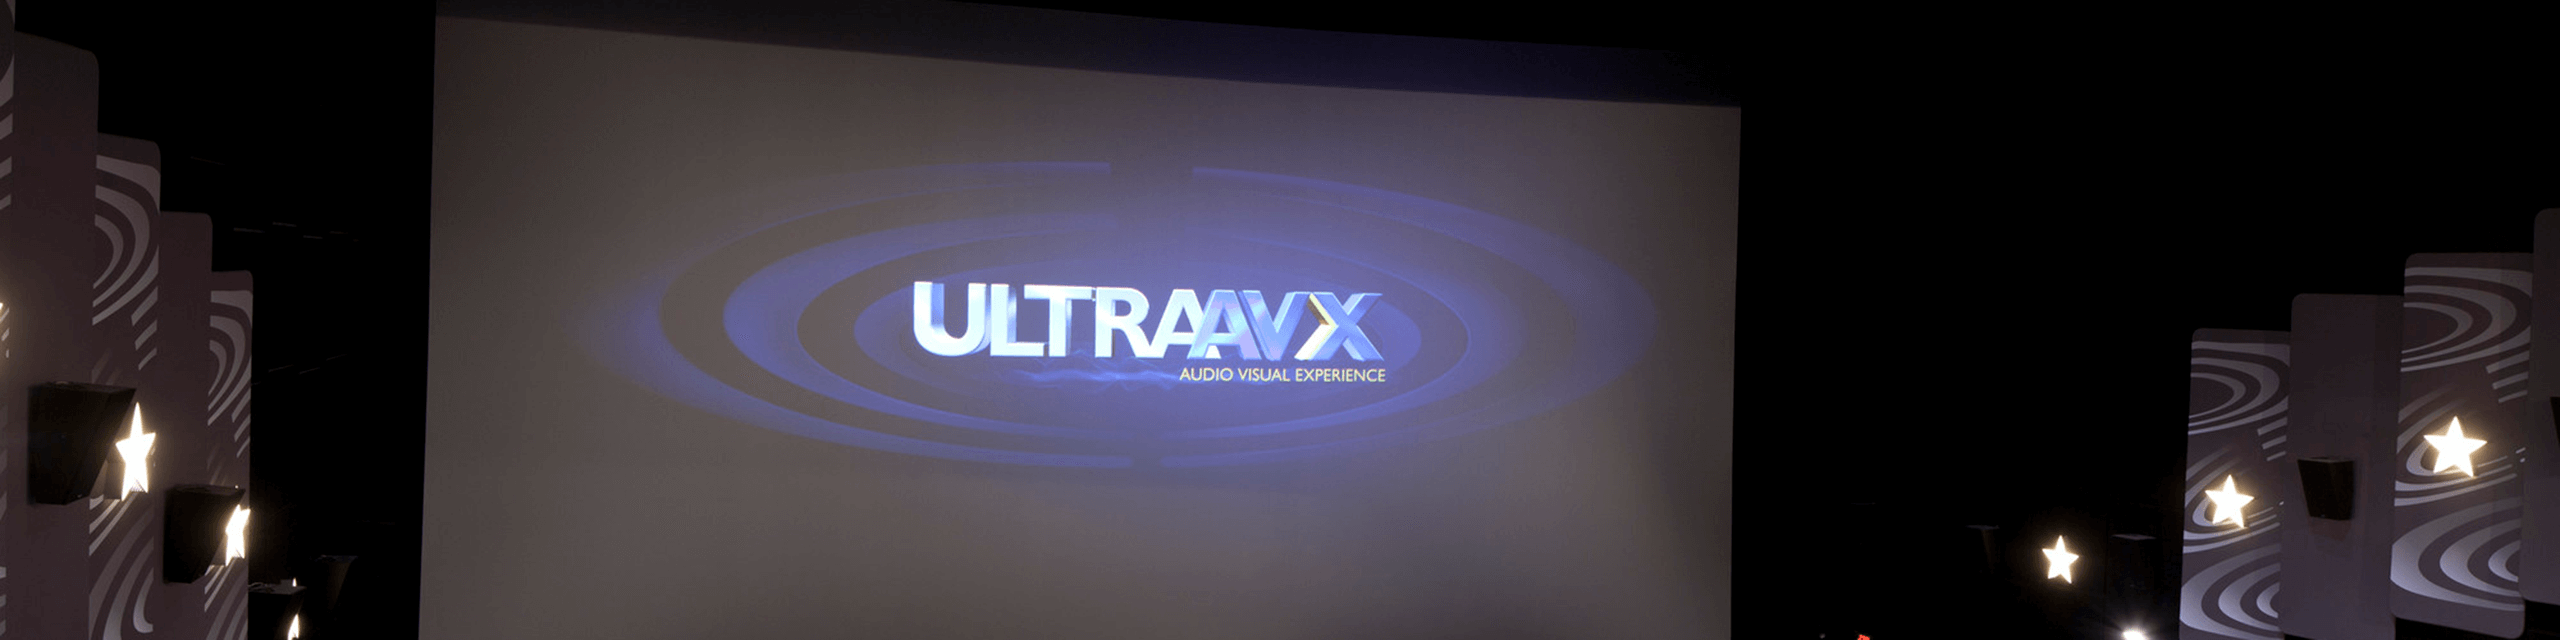 UltraAVX theatre